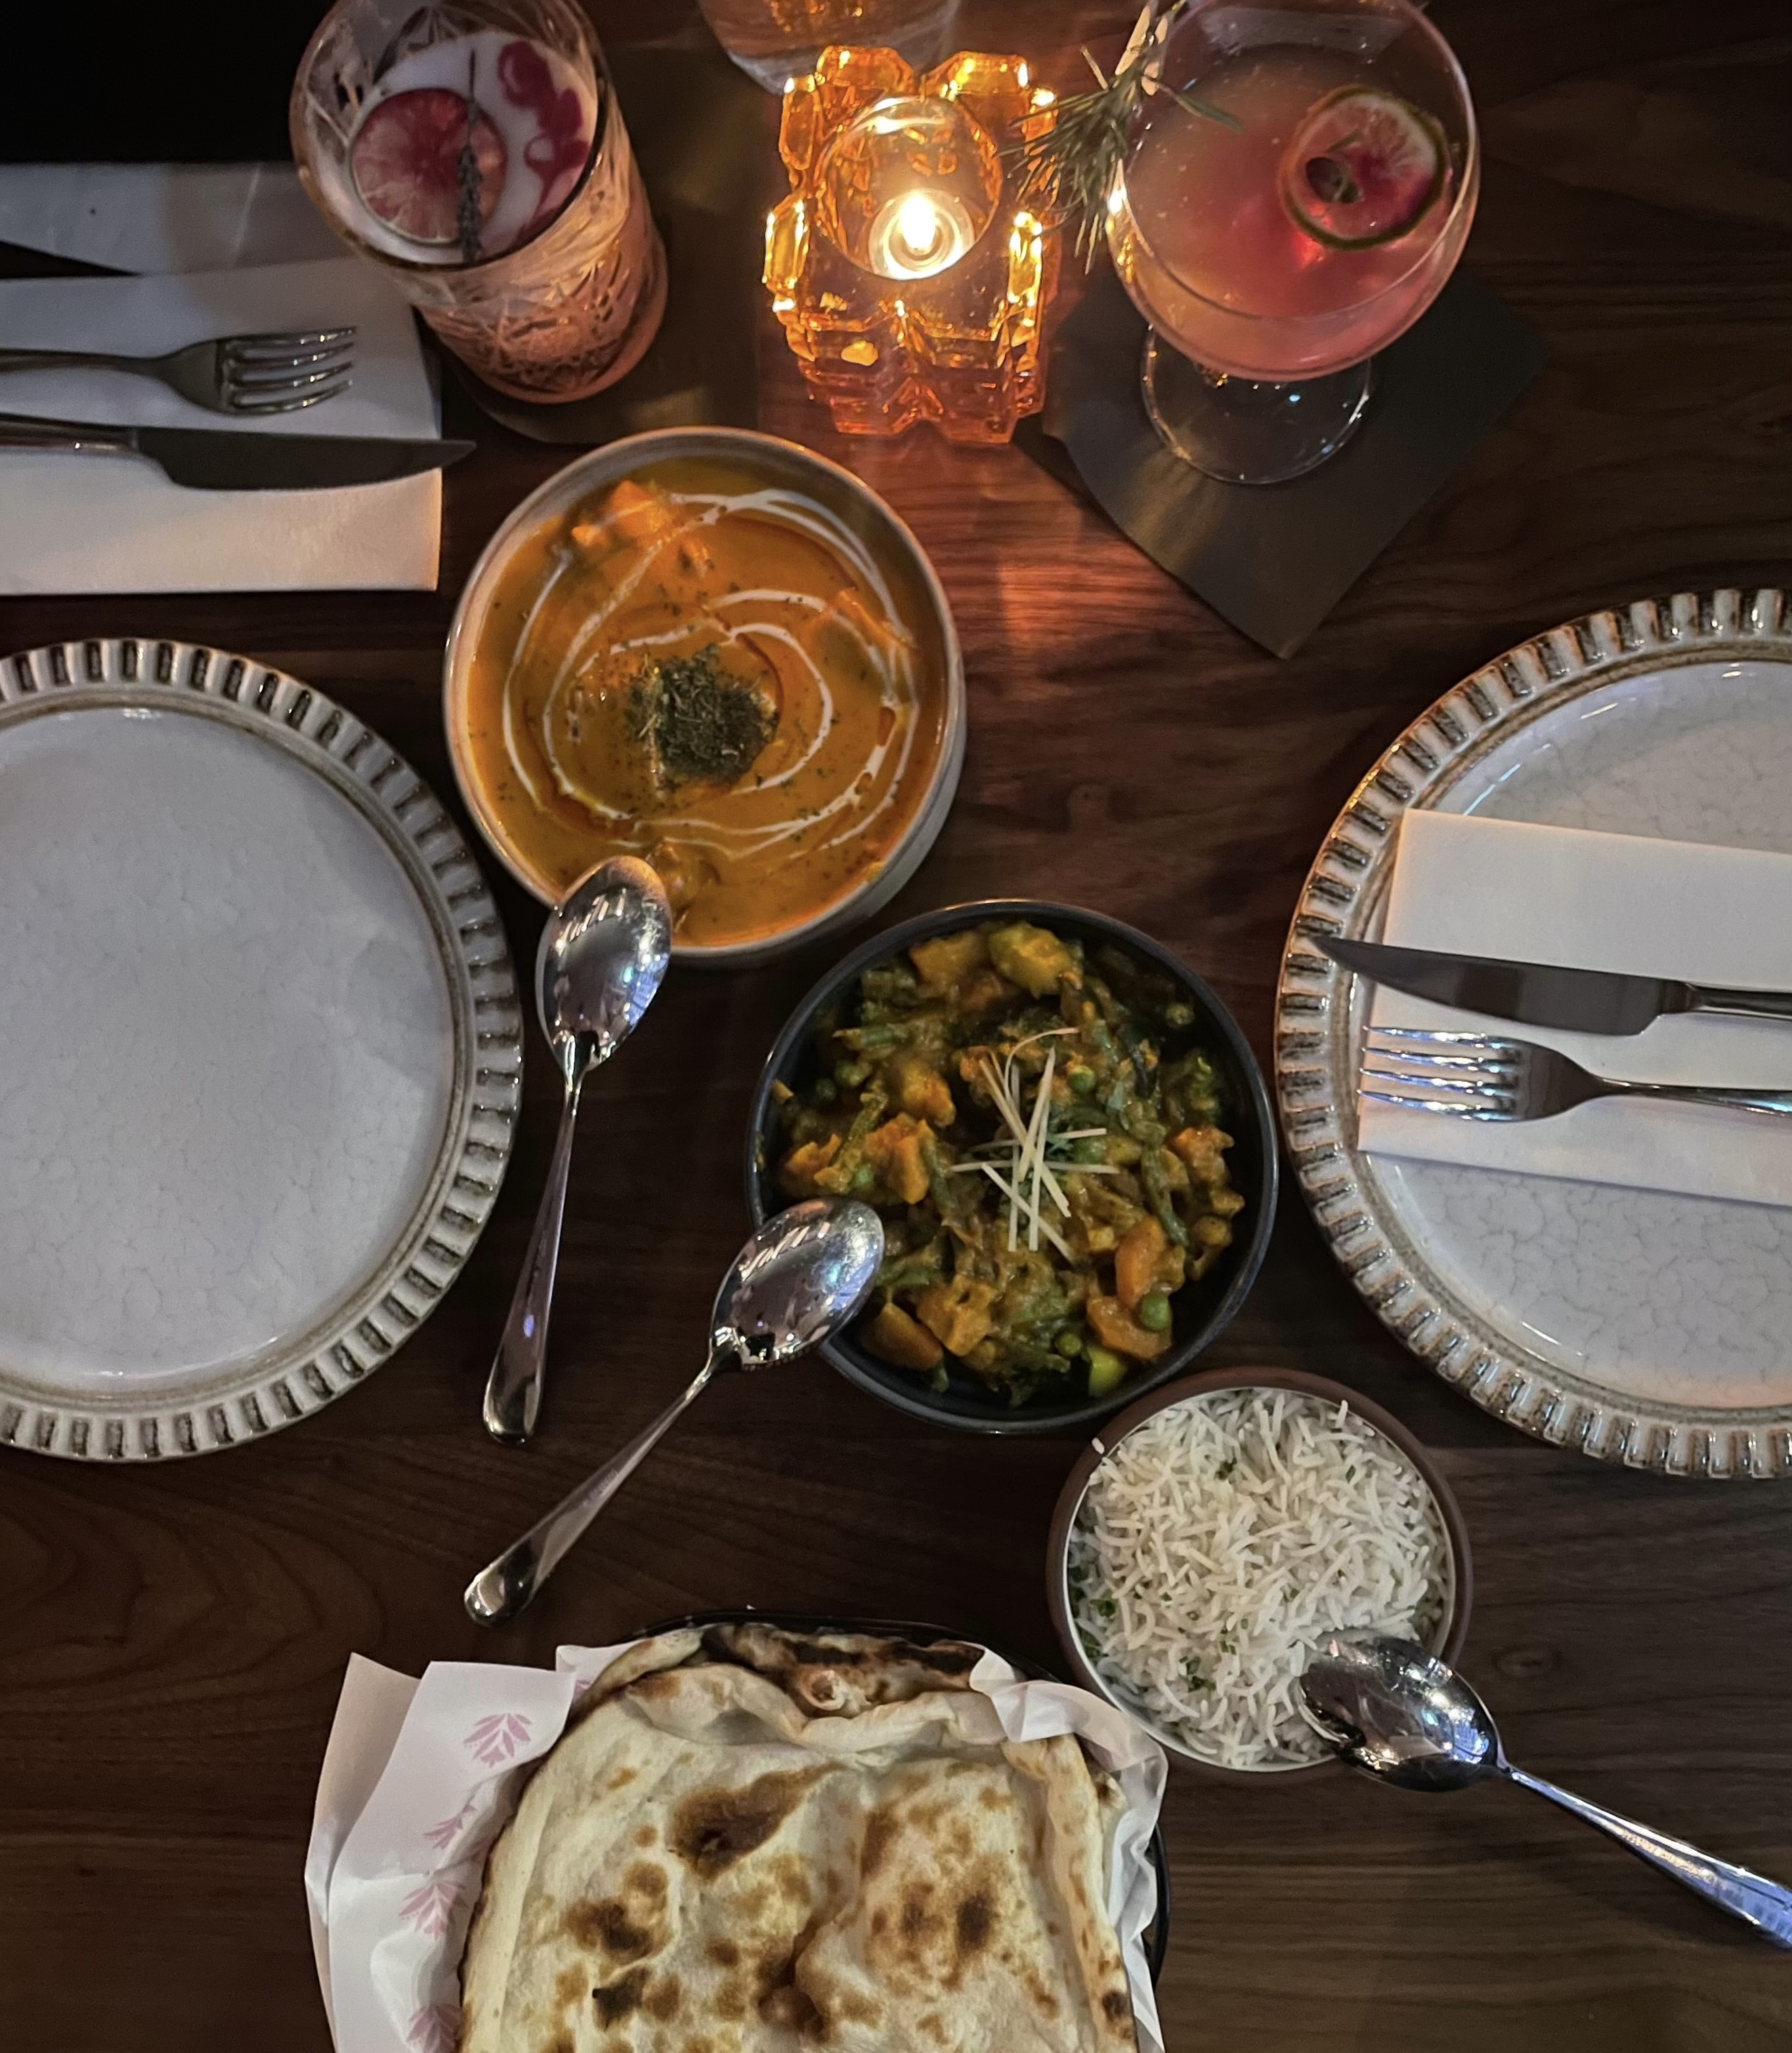 India Rosa Griffintown - Montreal restaurant -Indian cuisine -cuisine indienne